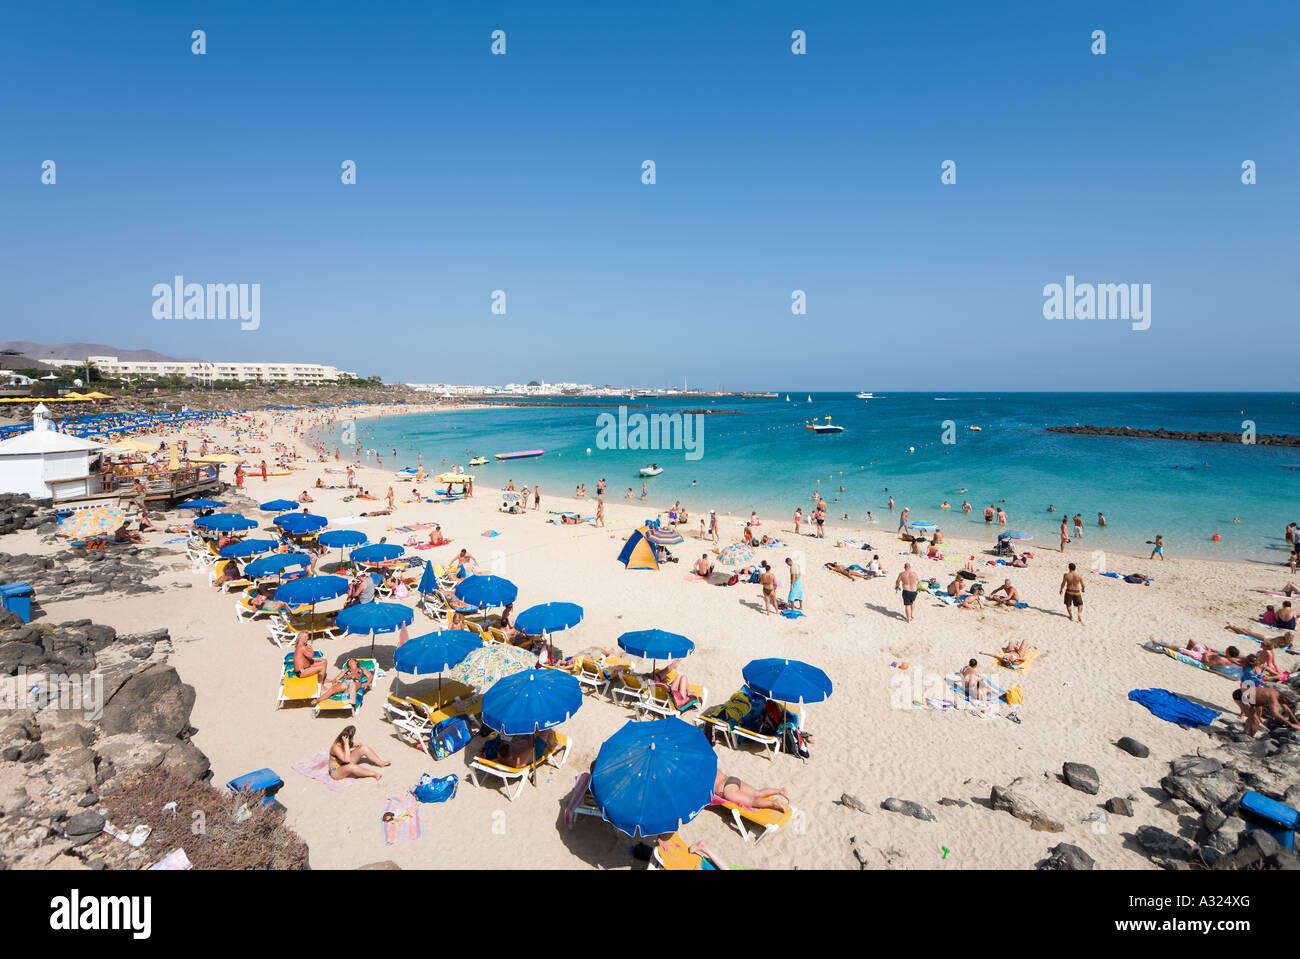 Main Beach, Playa Blanca, Lanzarote, îles Canaries, Espagne Banque D'Images